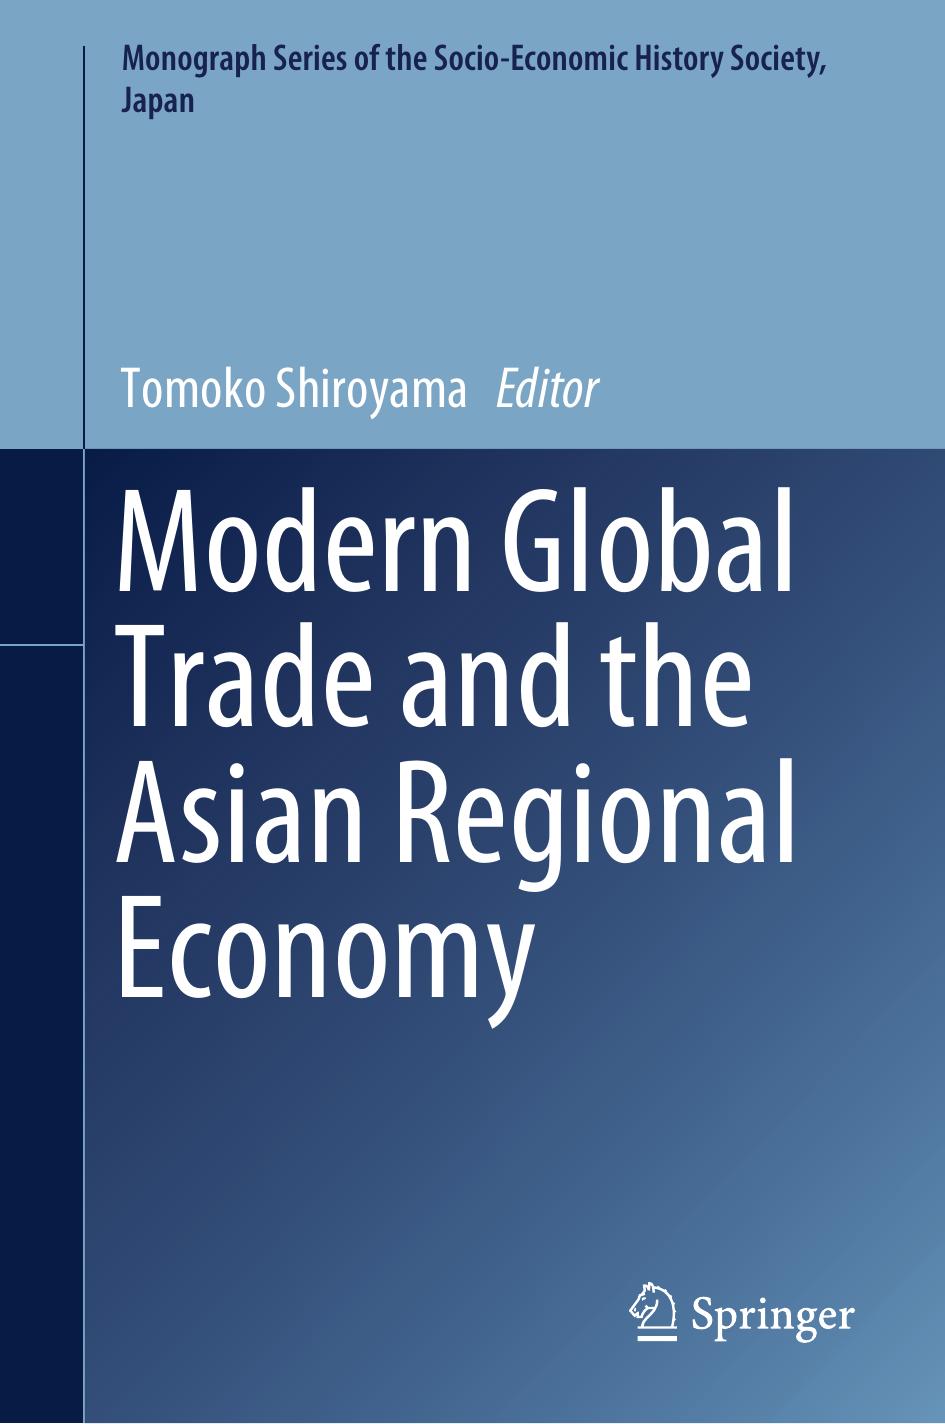 Modern Global Trade and the Asian Regional Economy by Tomoko Shiroyama